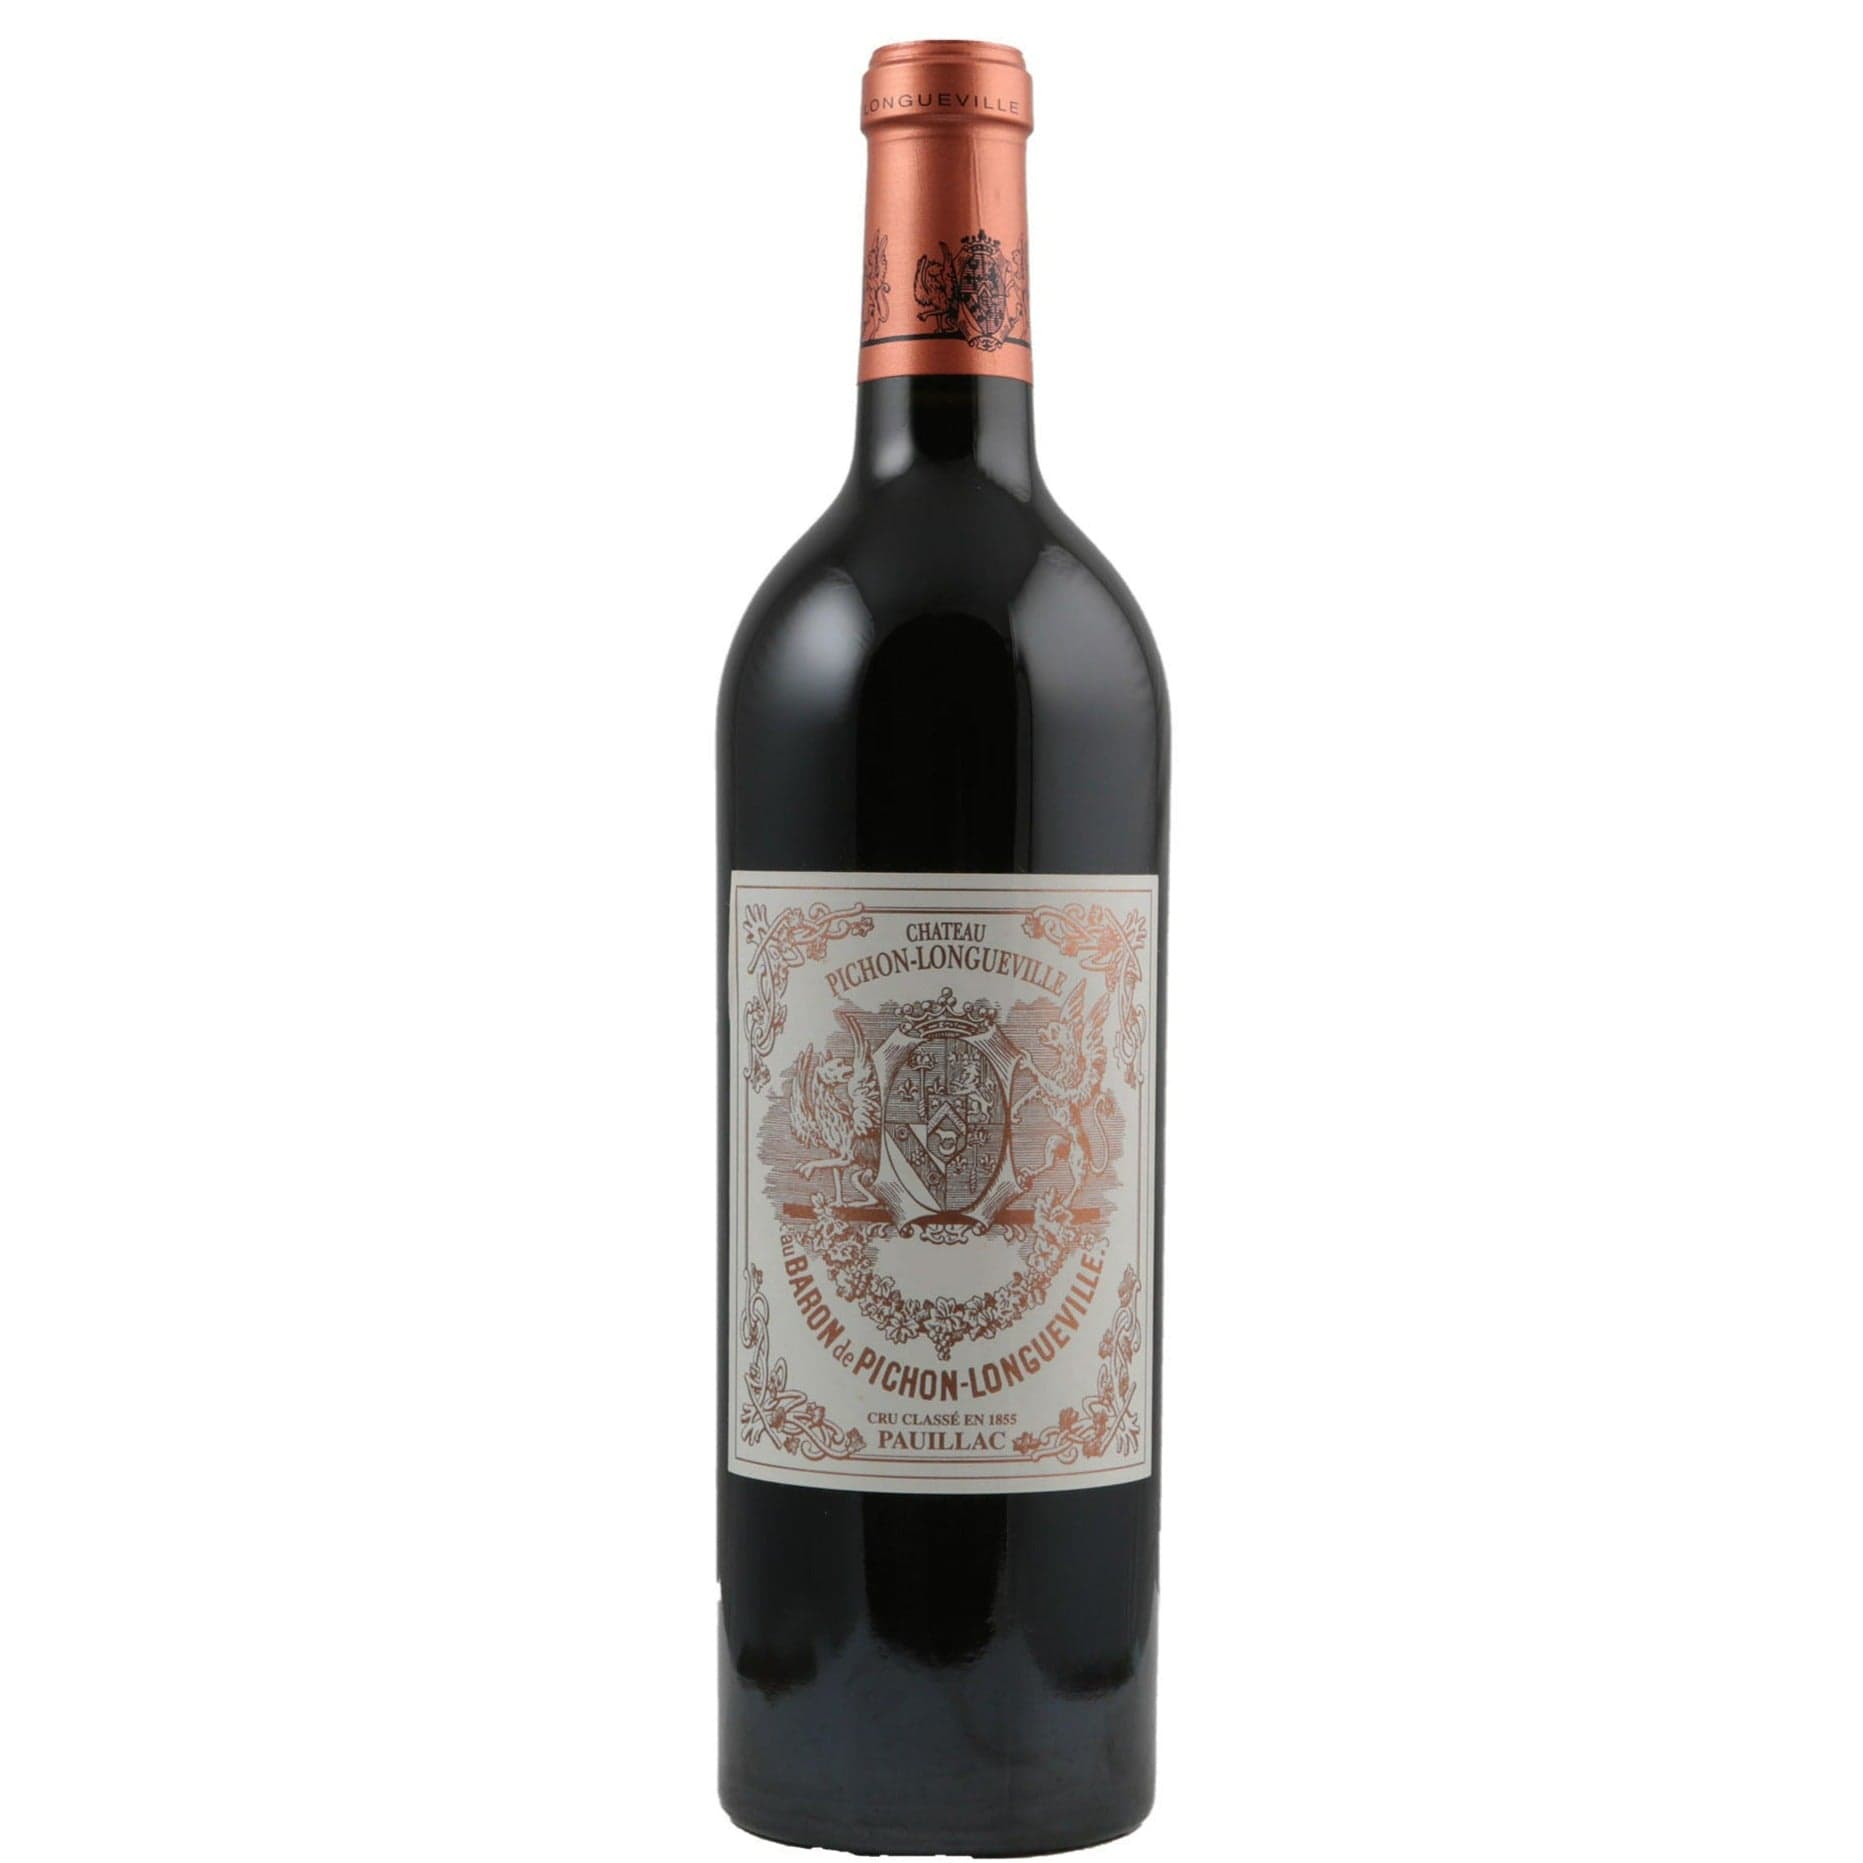 Single bottle of Red wine Ch. Pichon Baron, 2nd Growth Grand Cru Classe, Pauillac, 2010 79% Cabernet Sauvignon & 21% Merlot